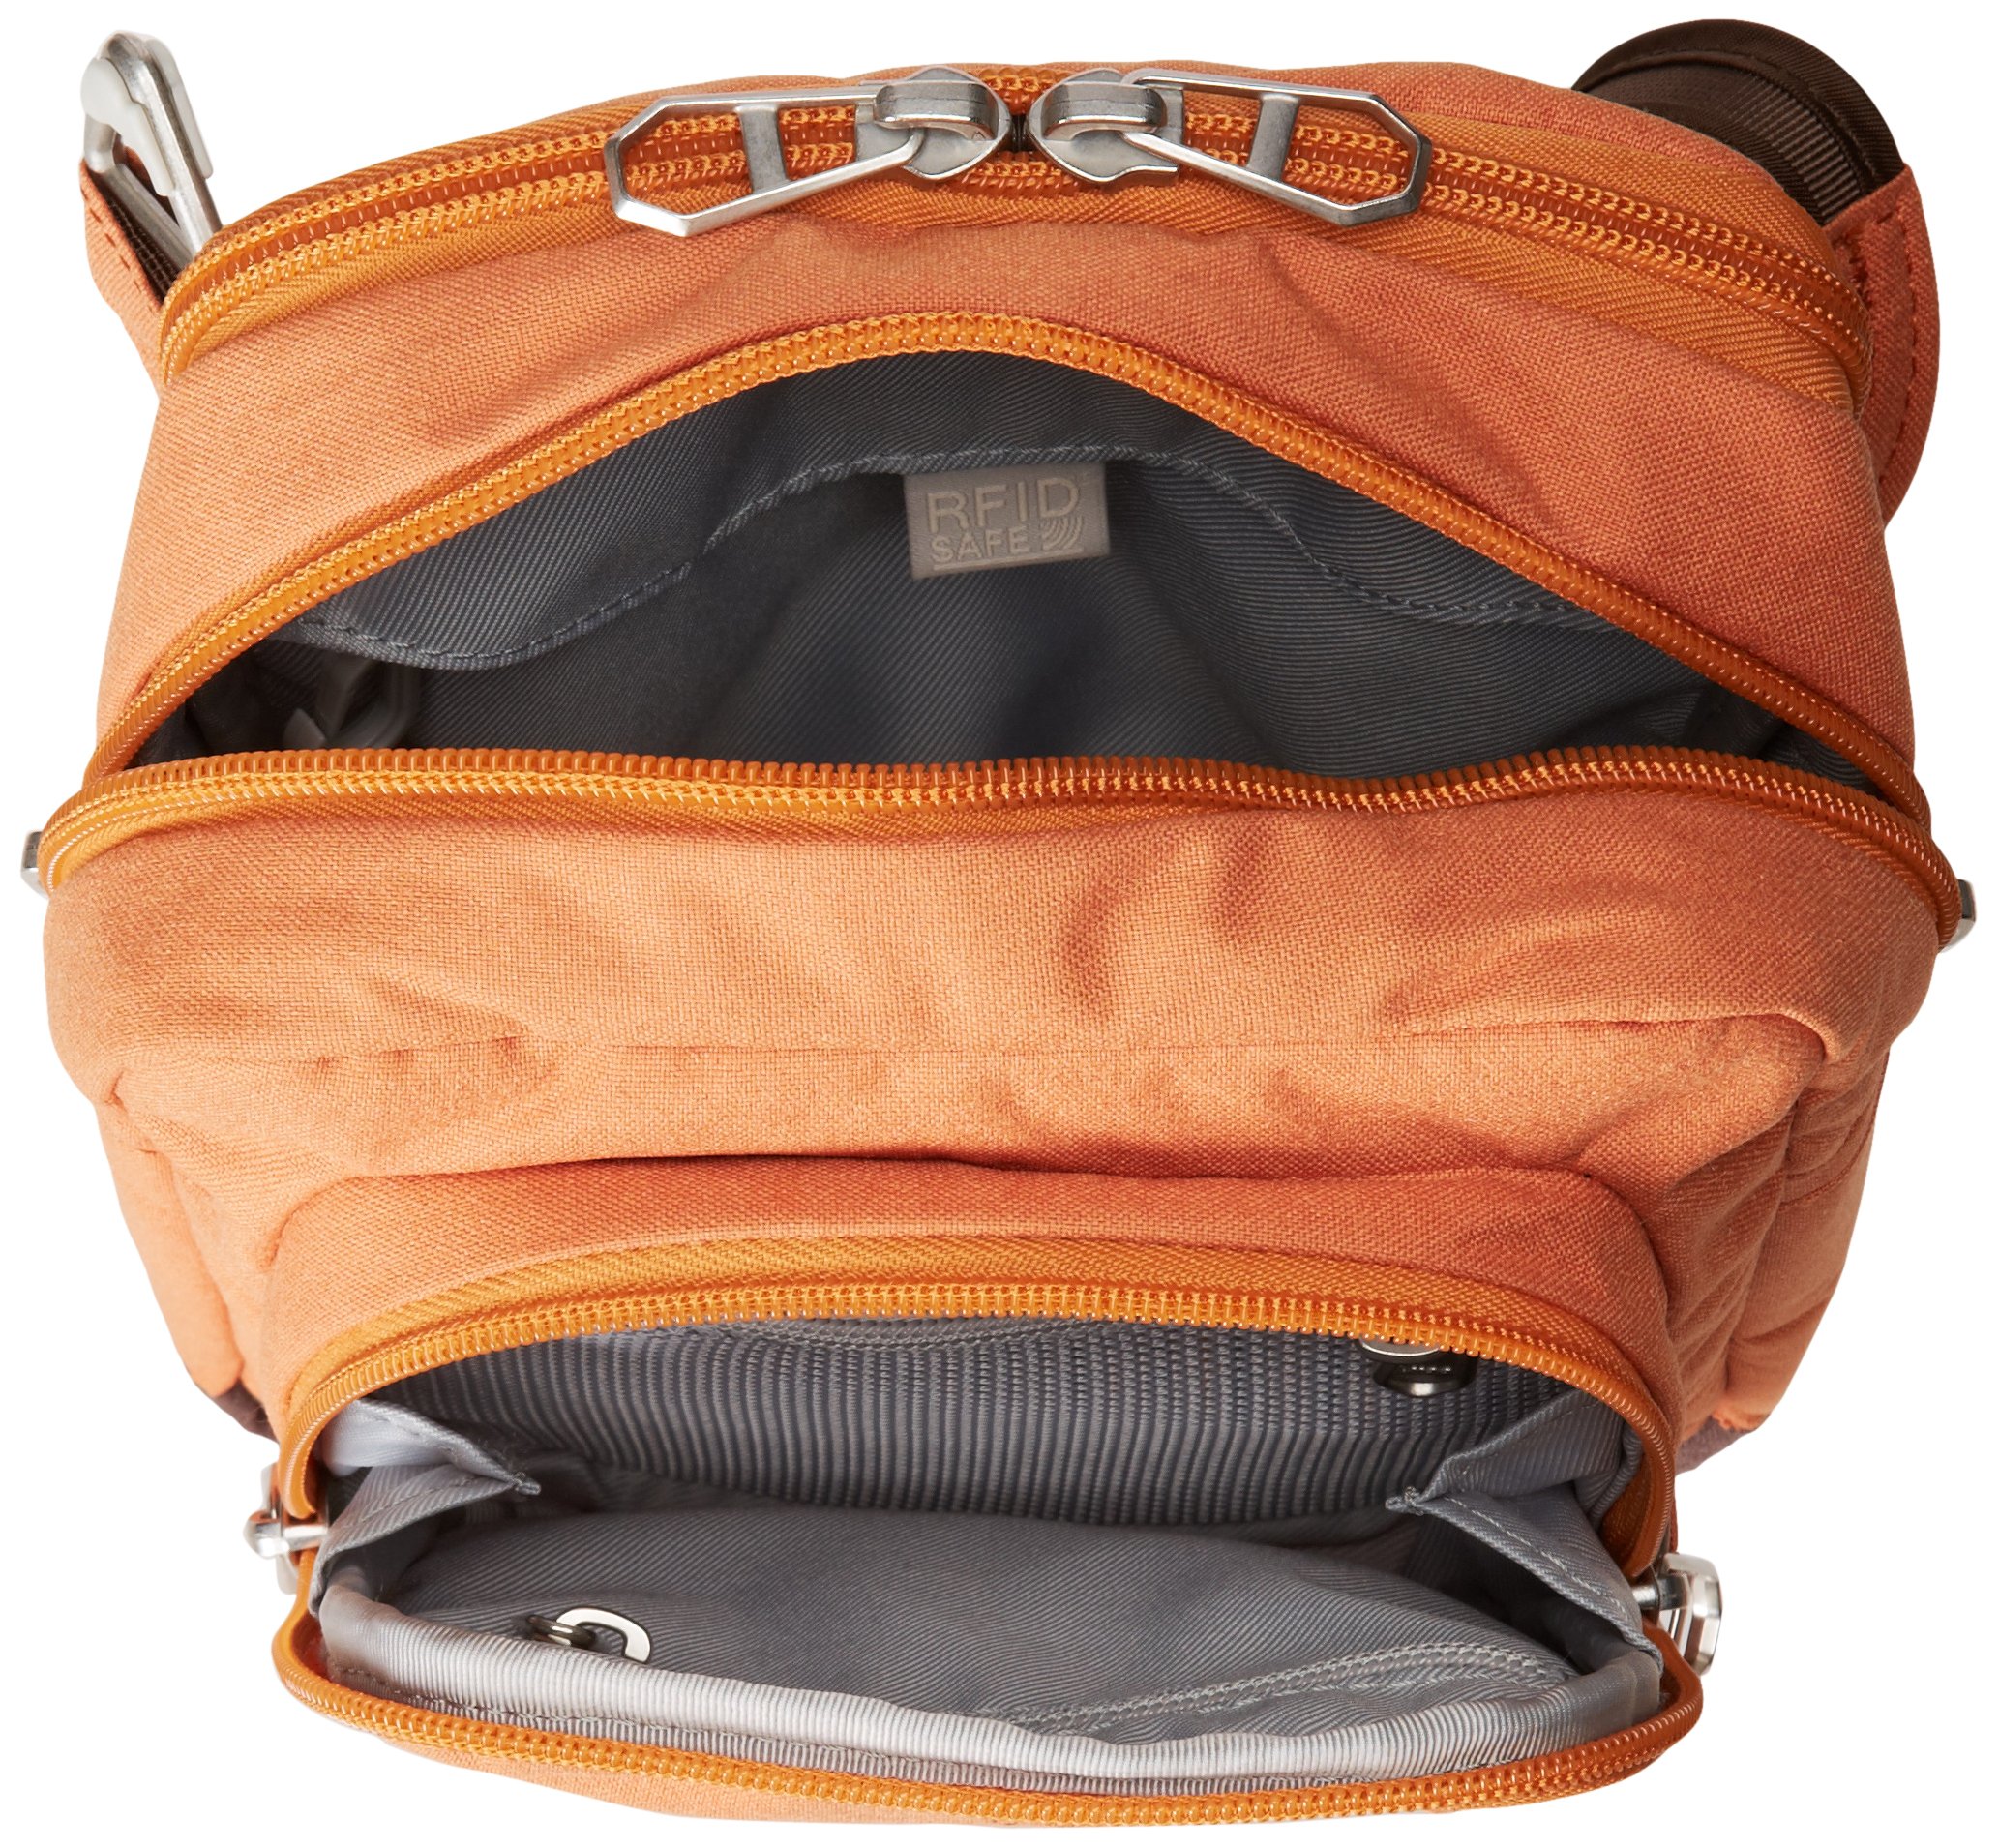 Pacsafe Citysafe LS75 Anti-Theft Cross-Body Travel Bag | eBay